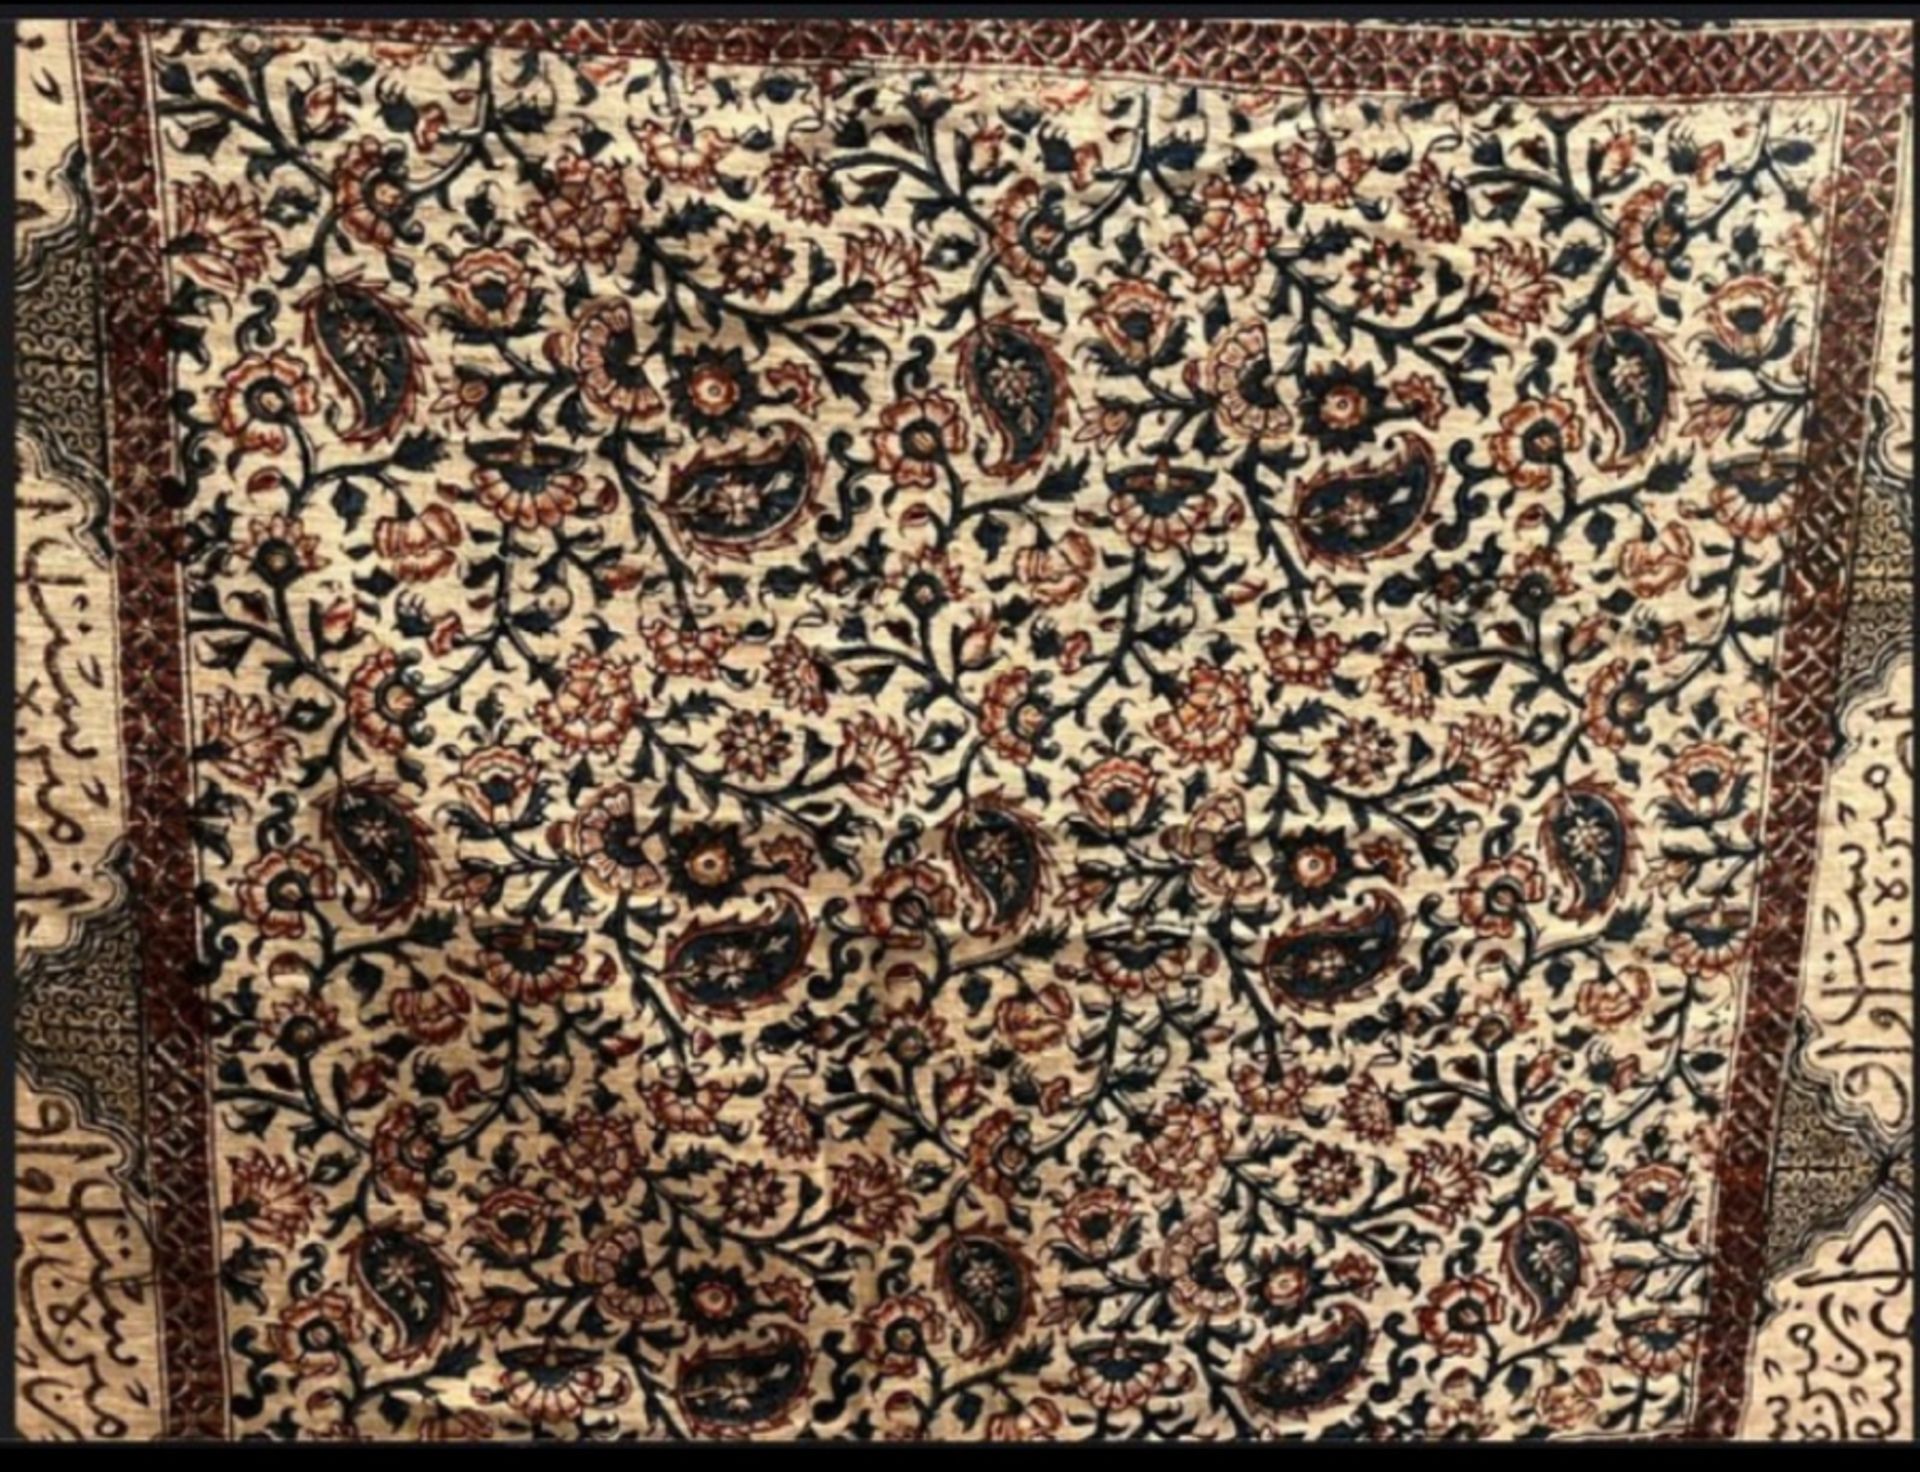 Kalamkari textile with islamic calligraphy - Image 4 of 12